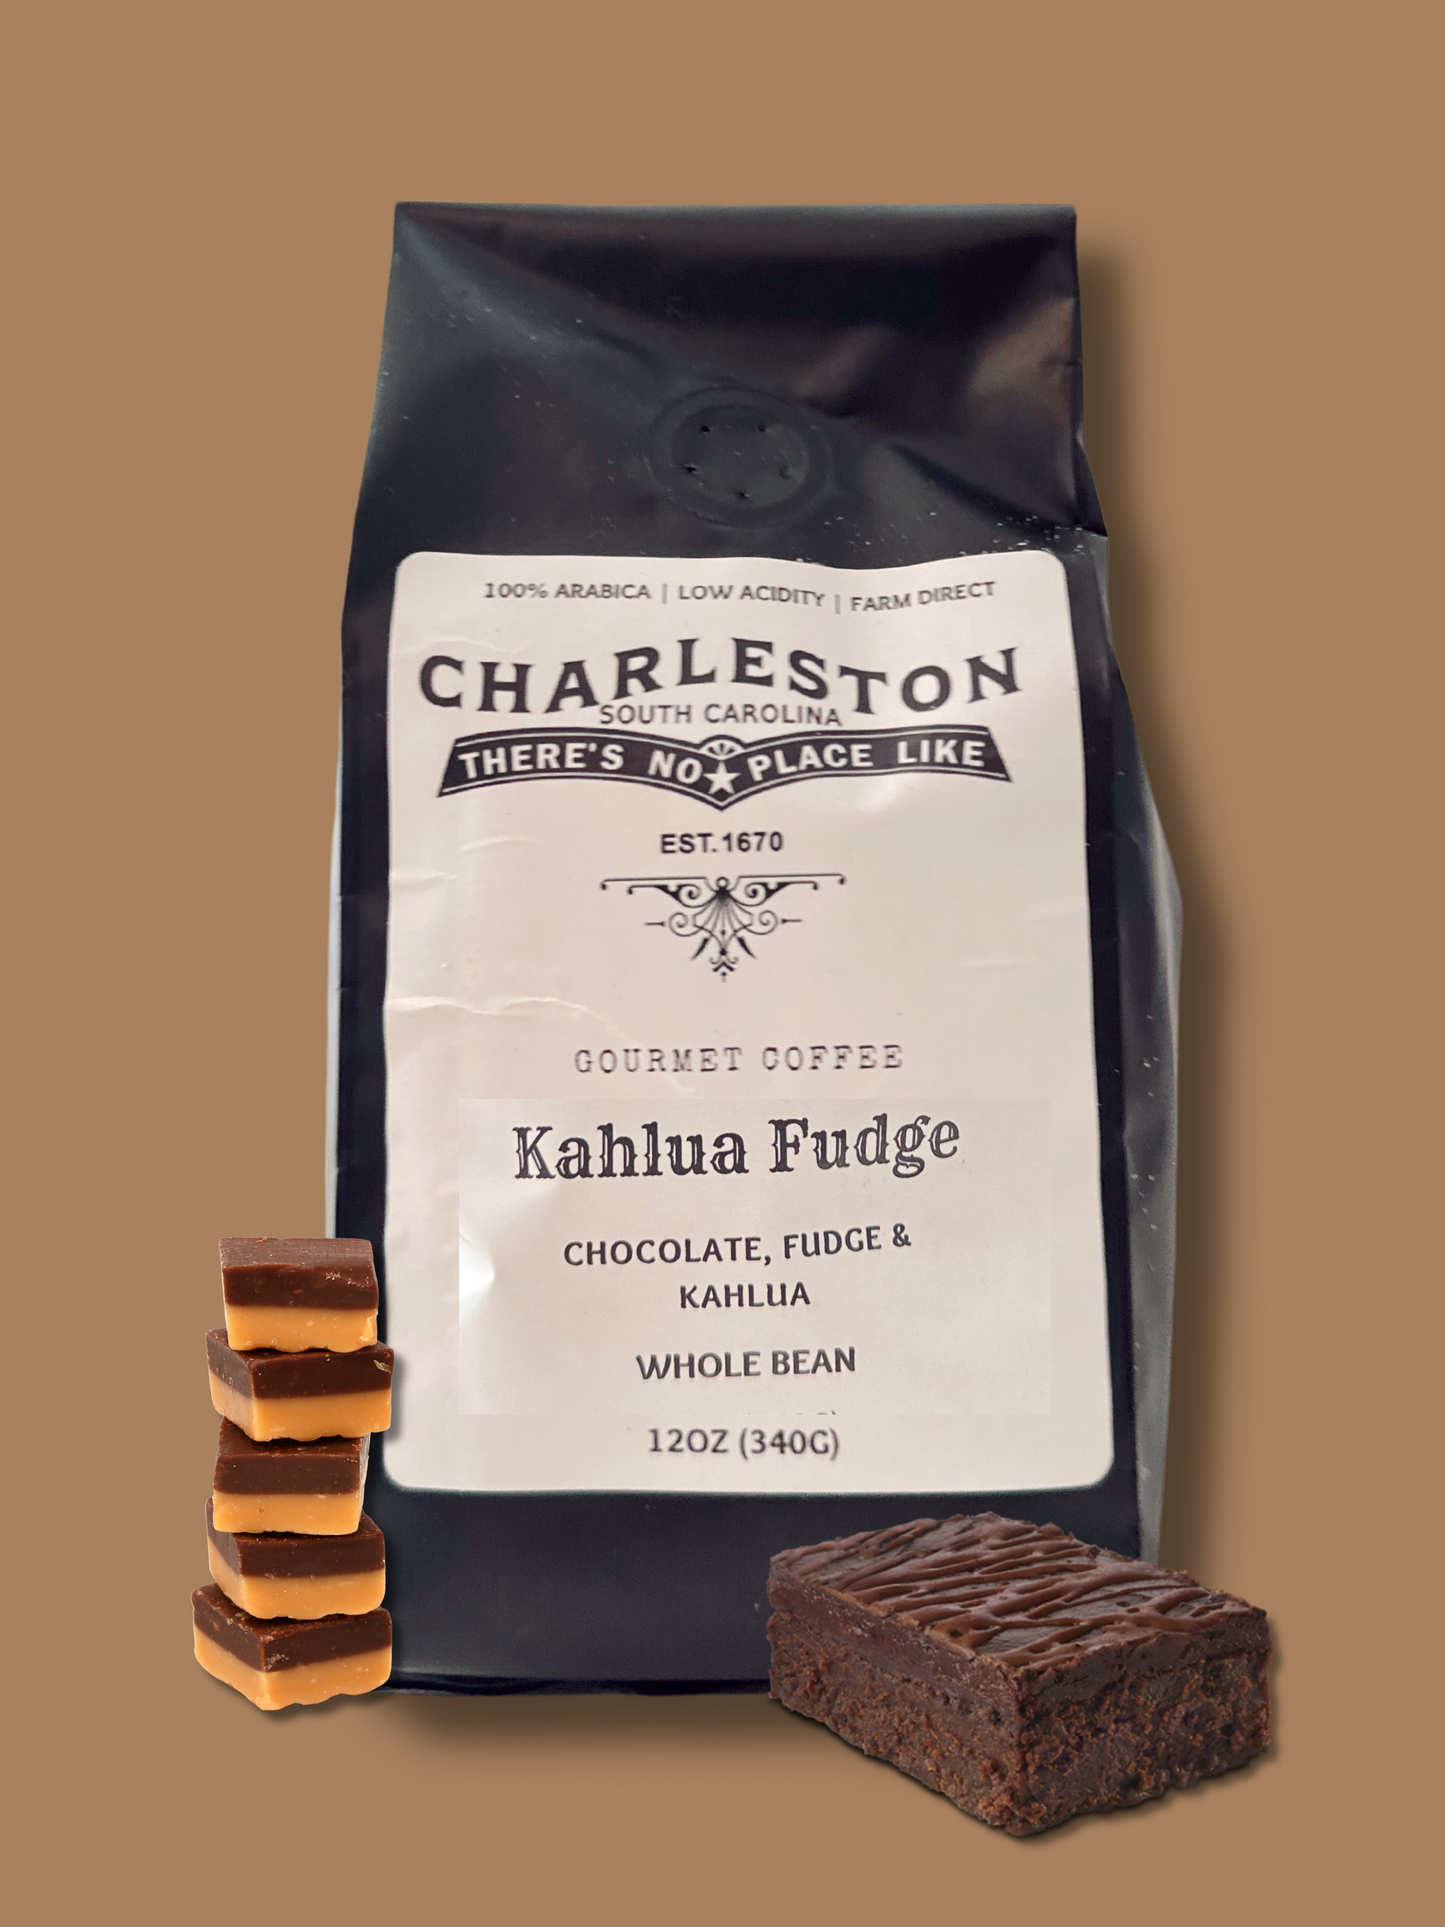 Kahlua Fudge | Chocolate Flavored Coffee